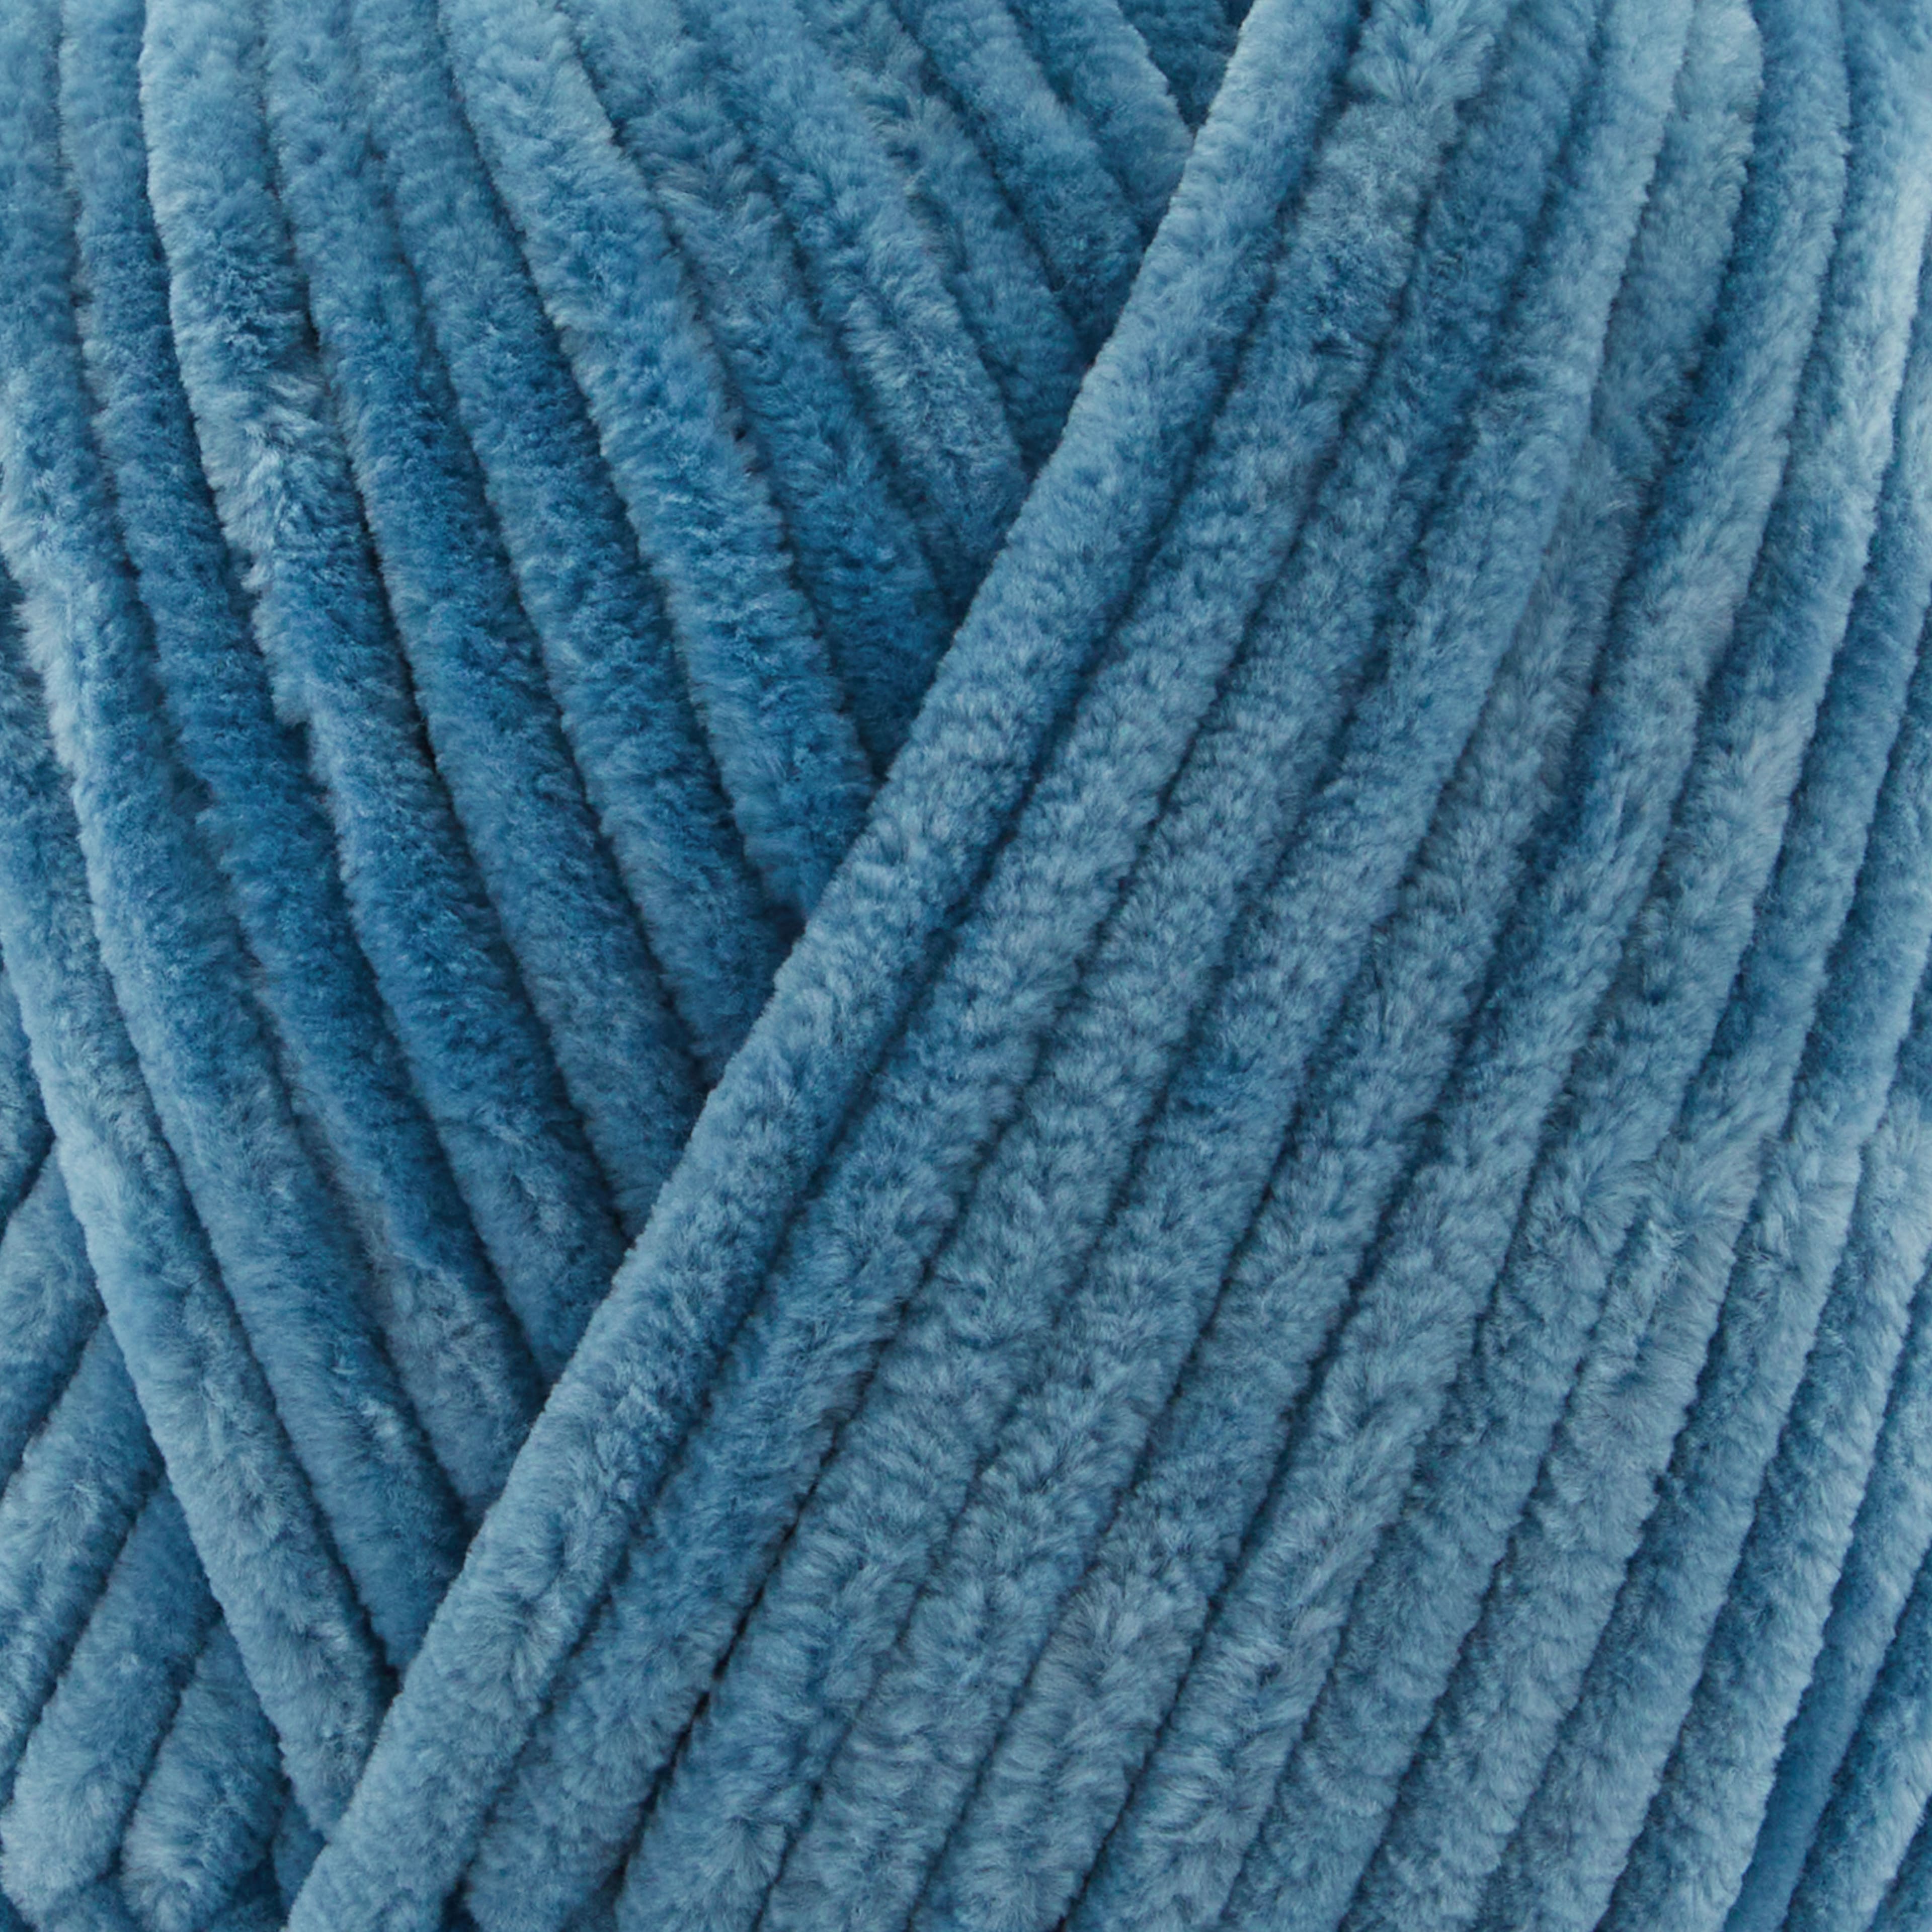 Loops & Threads Chenille Home Slim Solid Yarn - Navy Blue - 8.8 oz